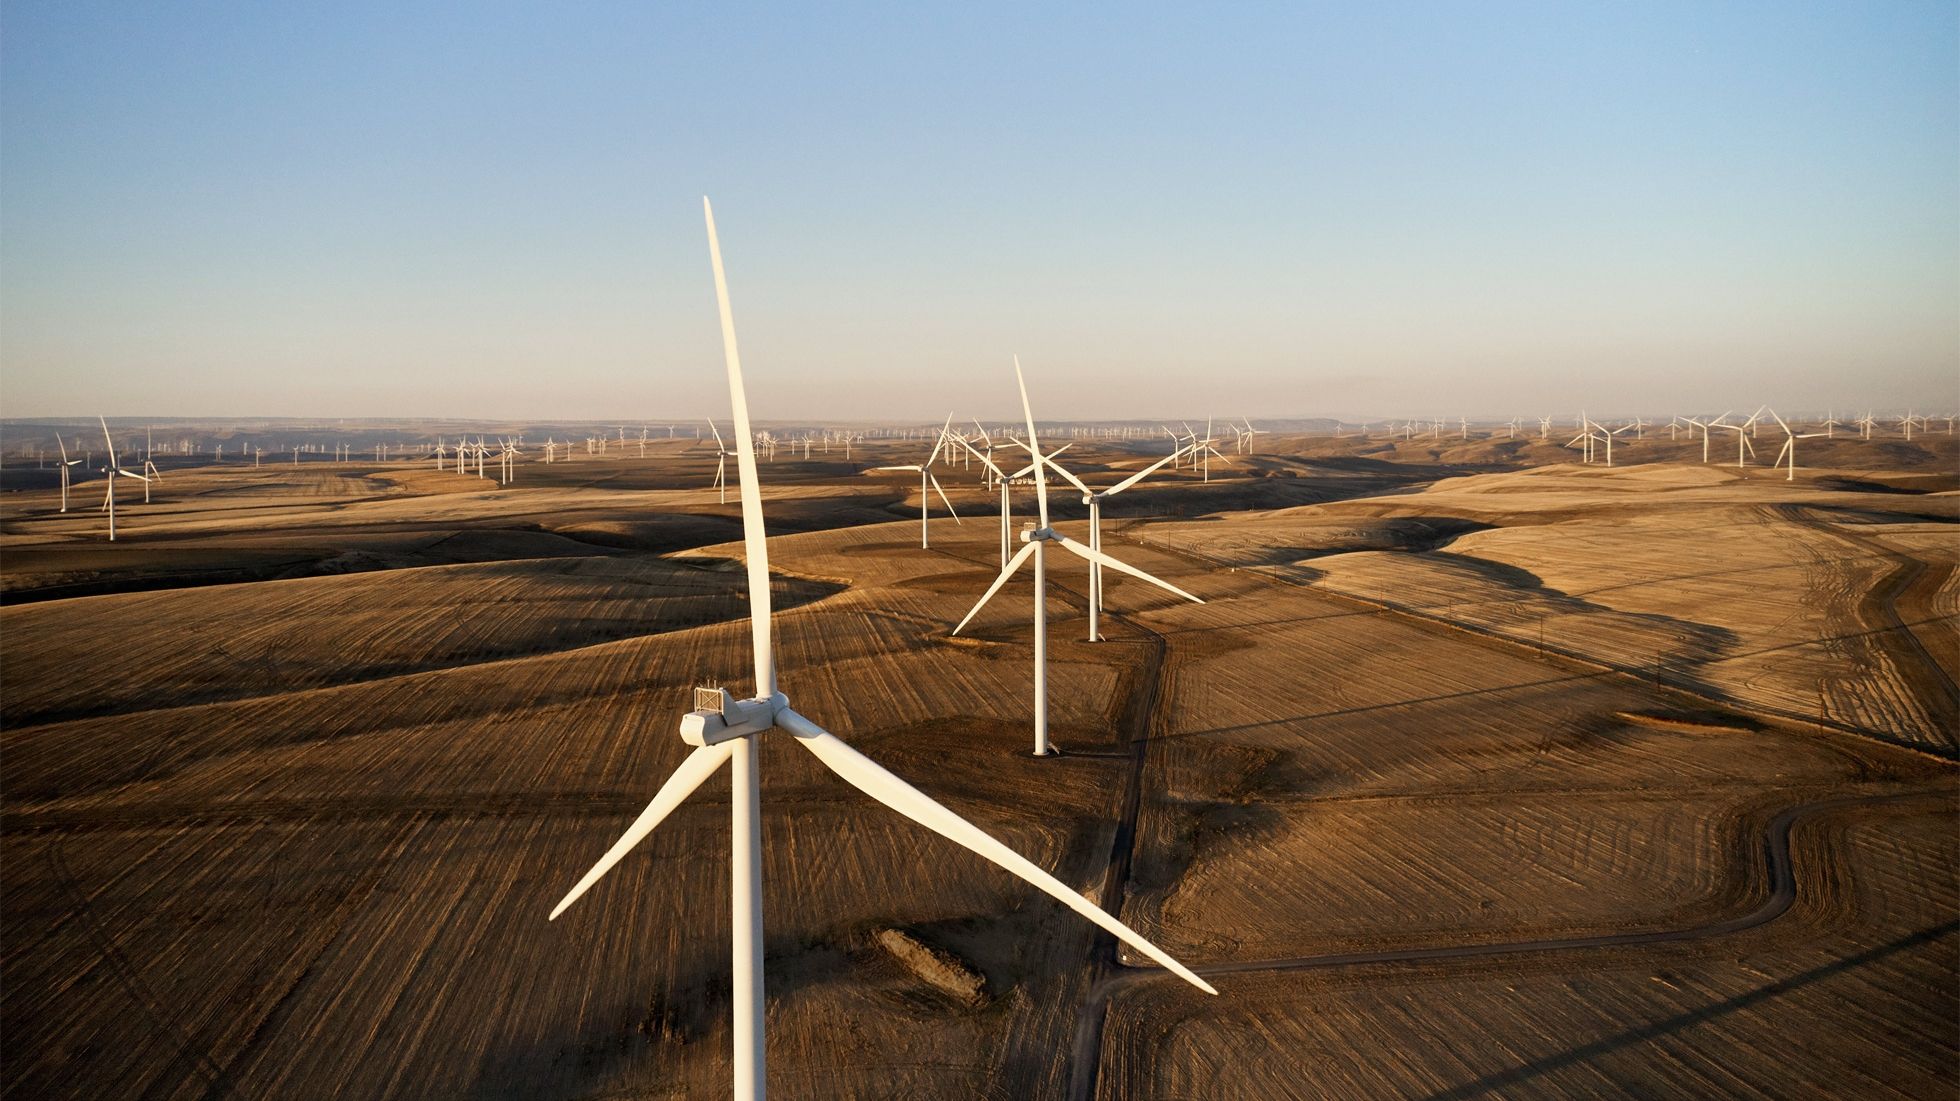 Field wind turbines generating clean energy for Apple